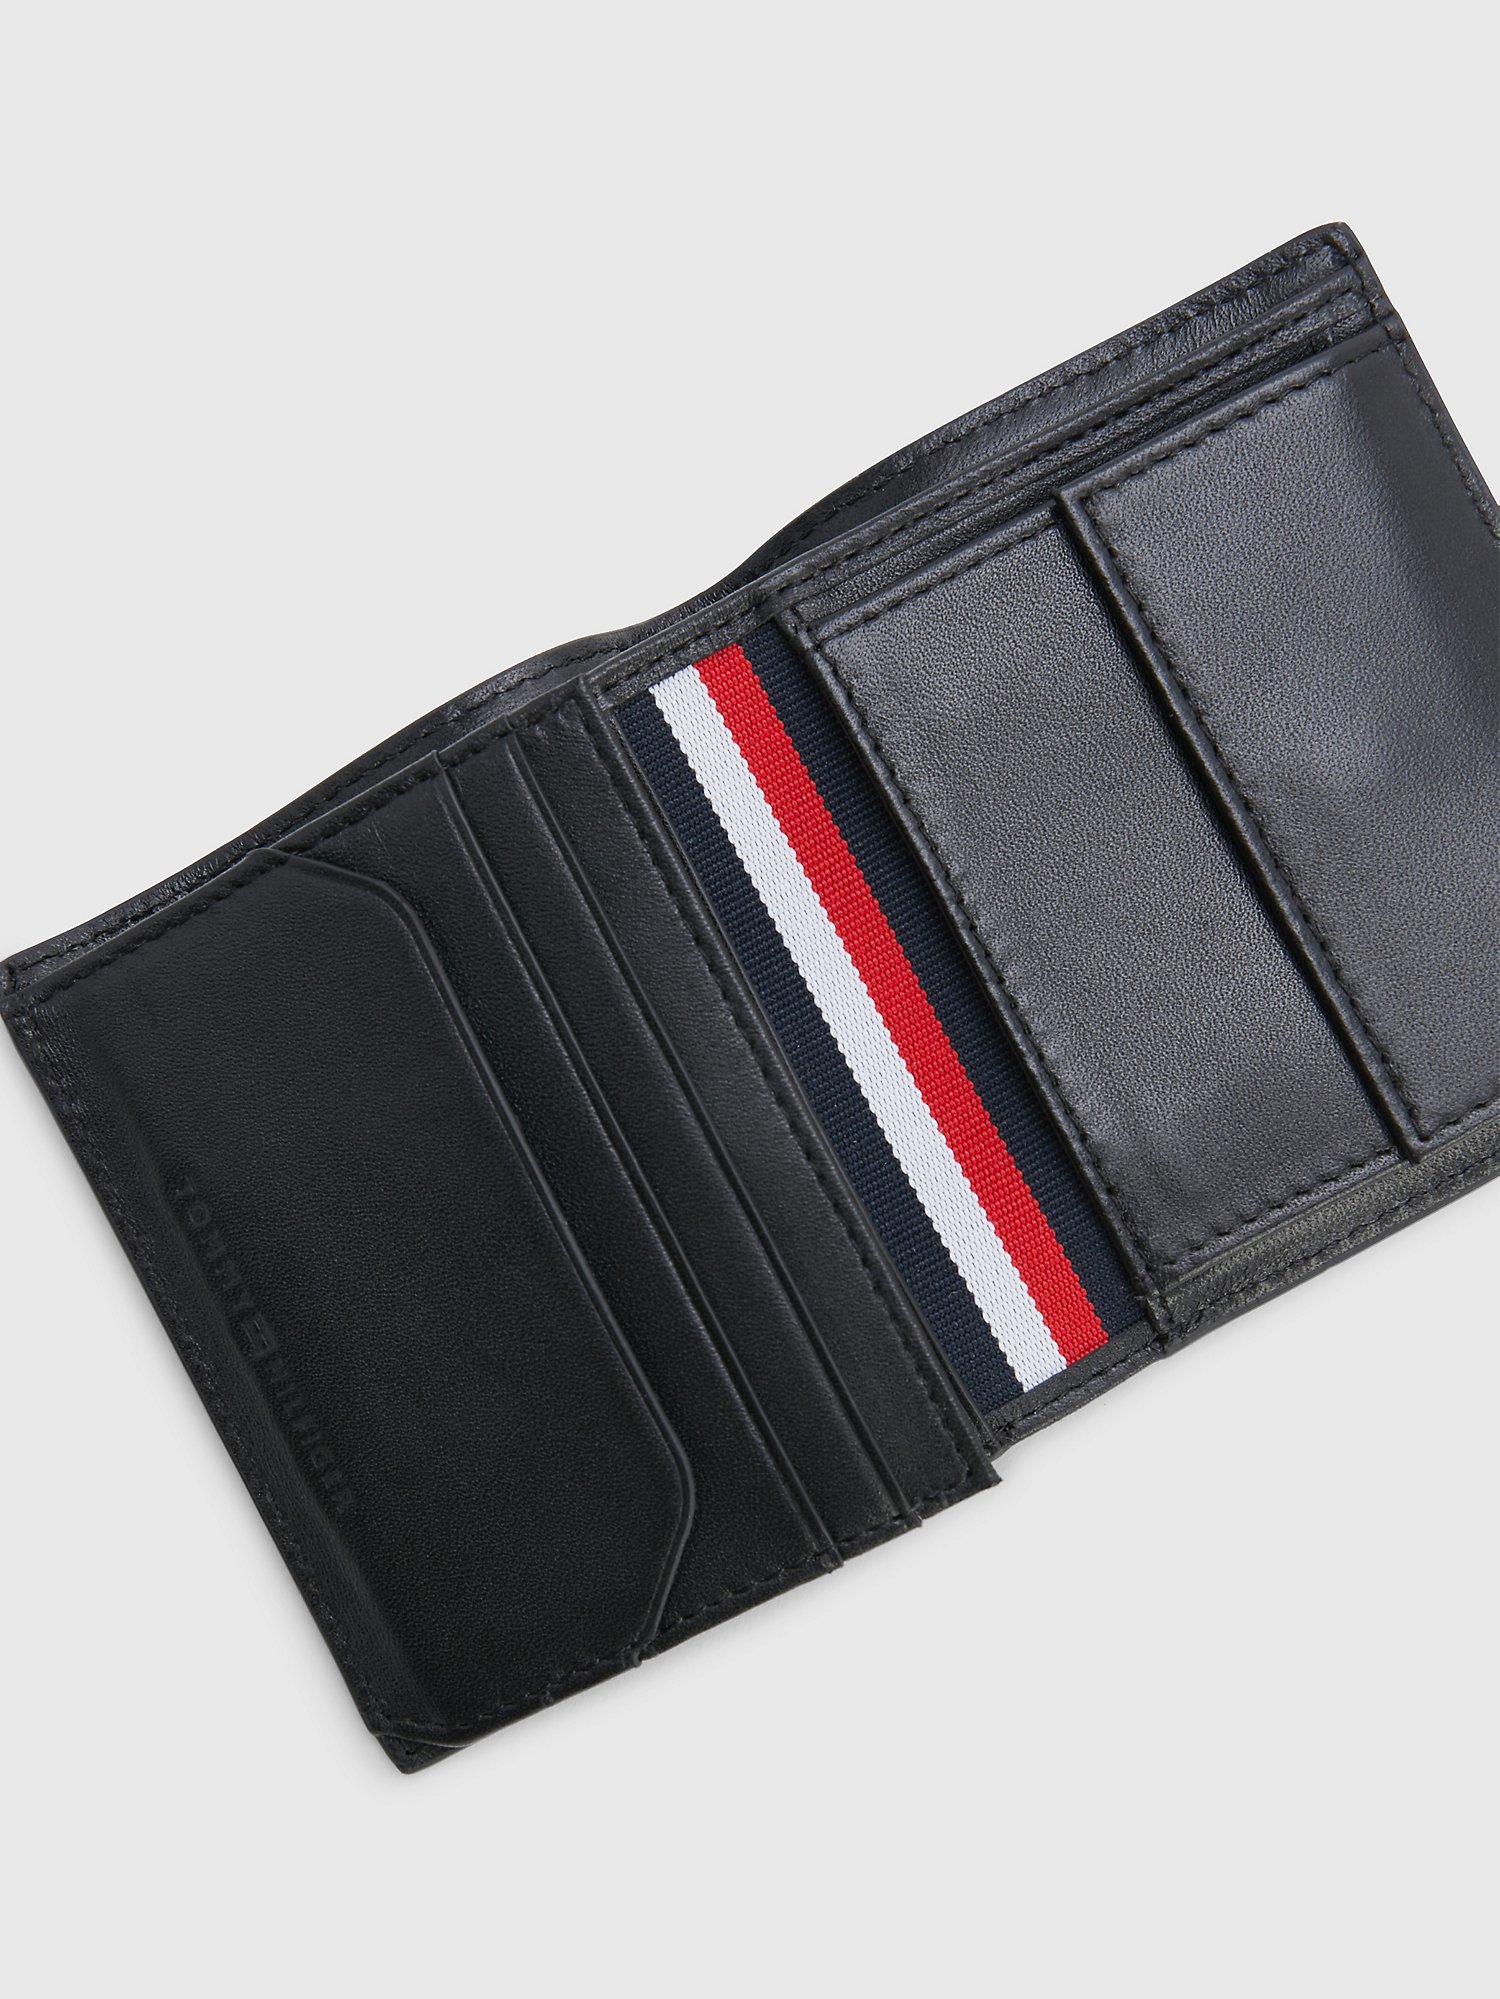 Hilfiger Leather Wallet | Tommy